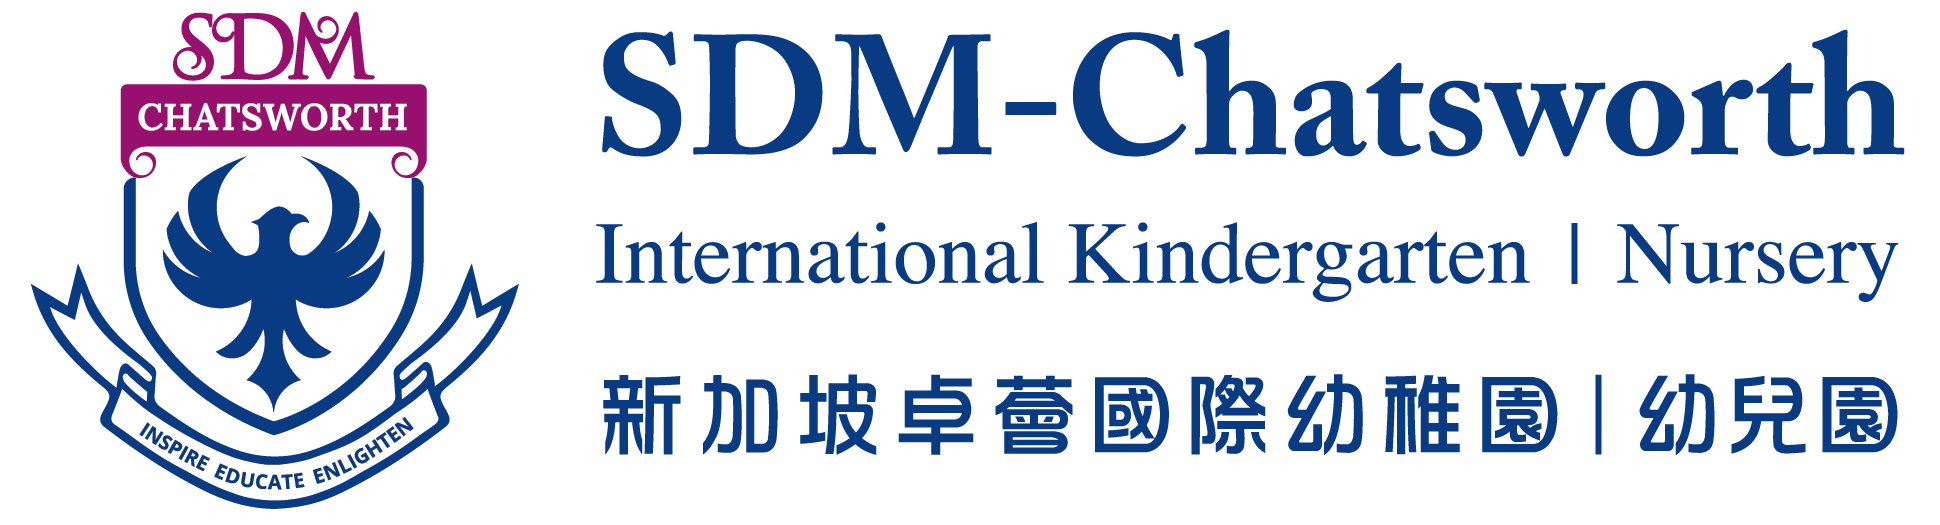 SDM-Chatsworth International Kindergarten